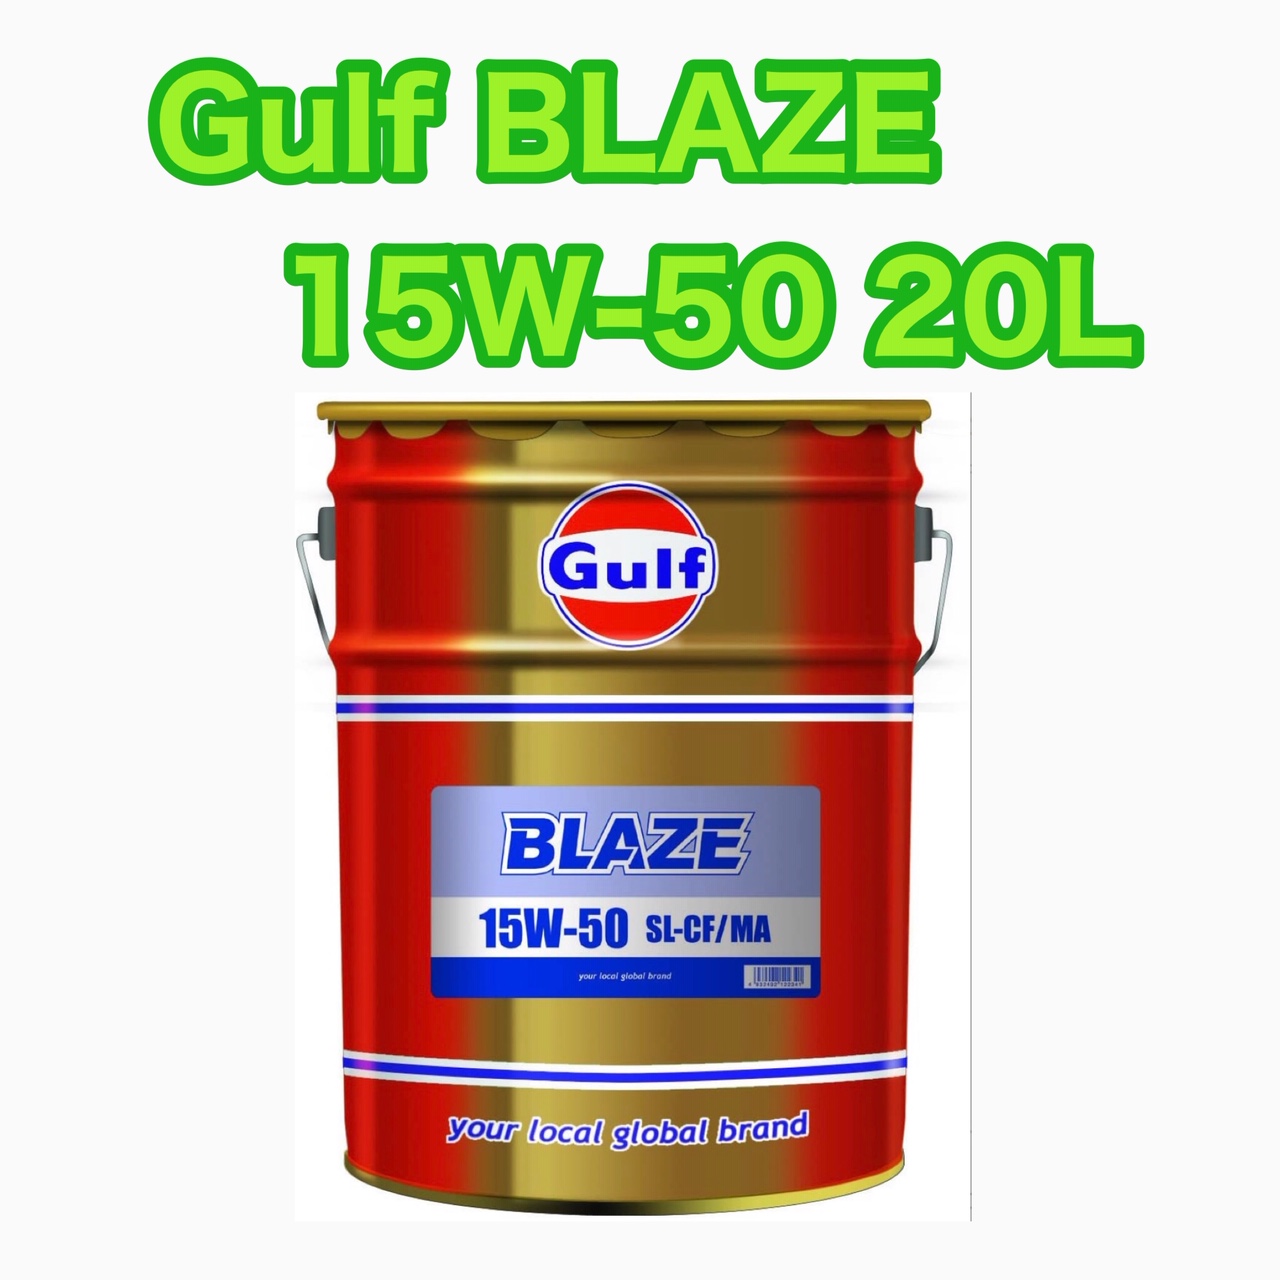 Gulf 記念日 BLAZE ガルフ 無料 15W-50 20L缶 ブレイズ